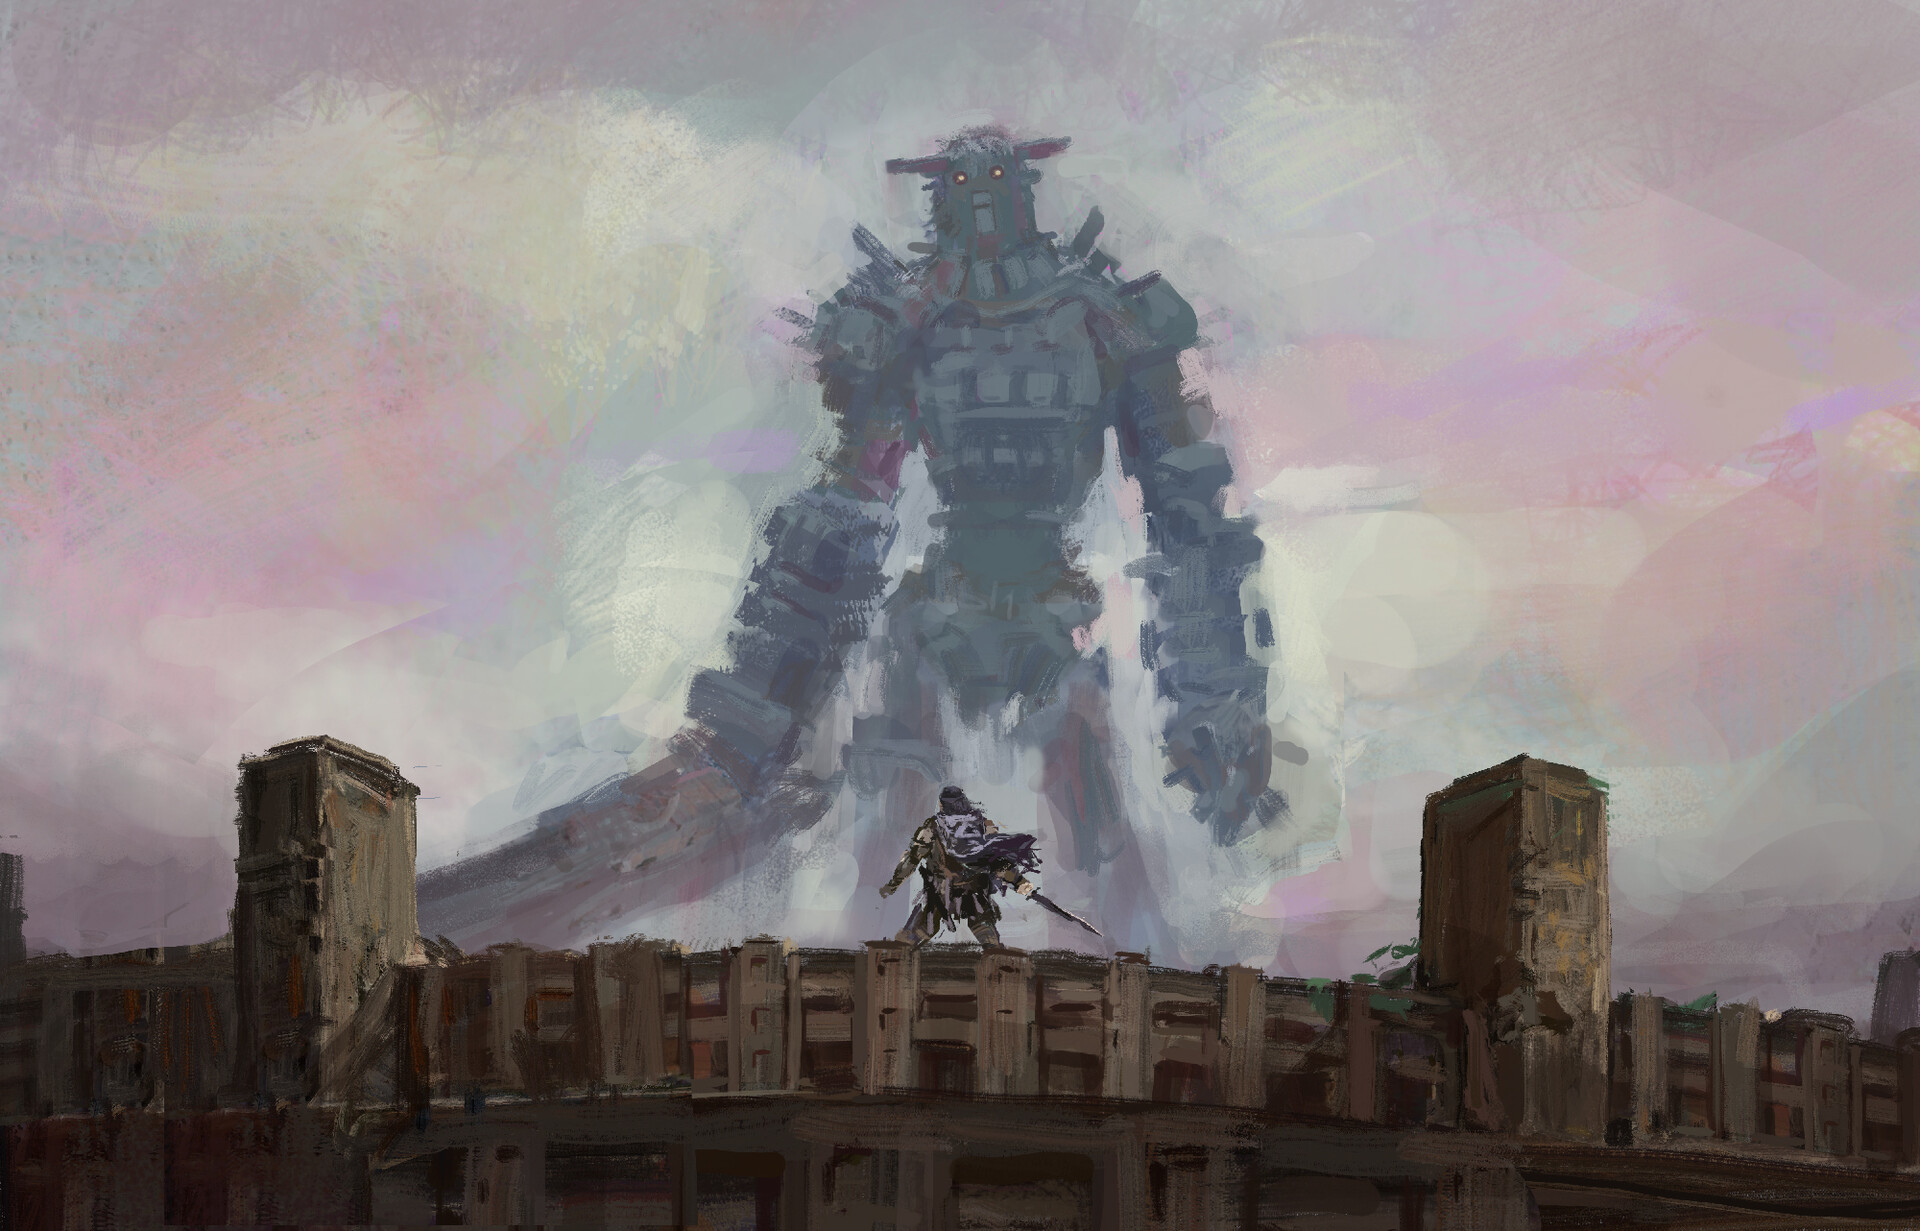 ArtStation - Shadow of the Colossus : Phaedra